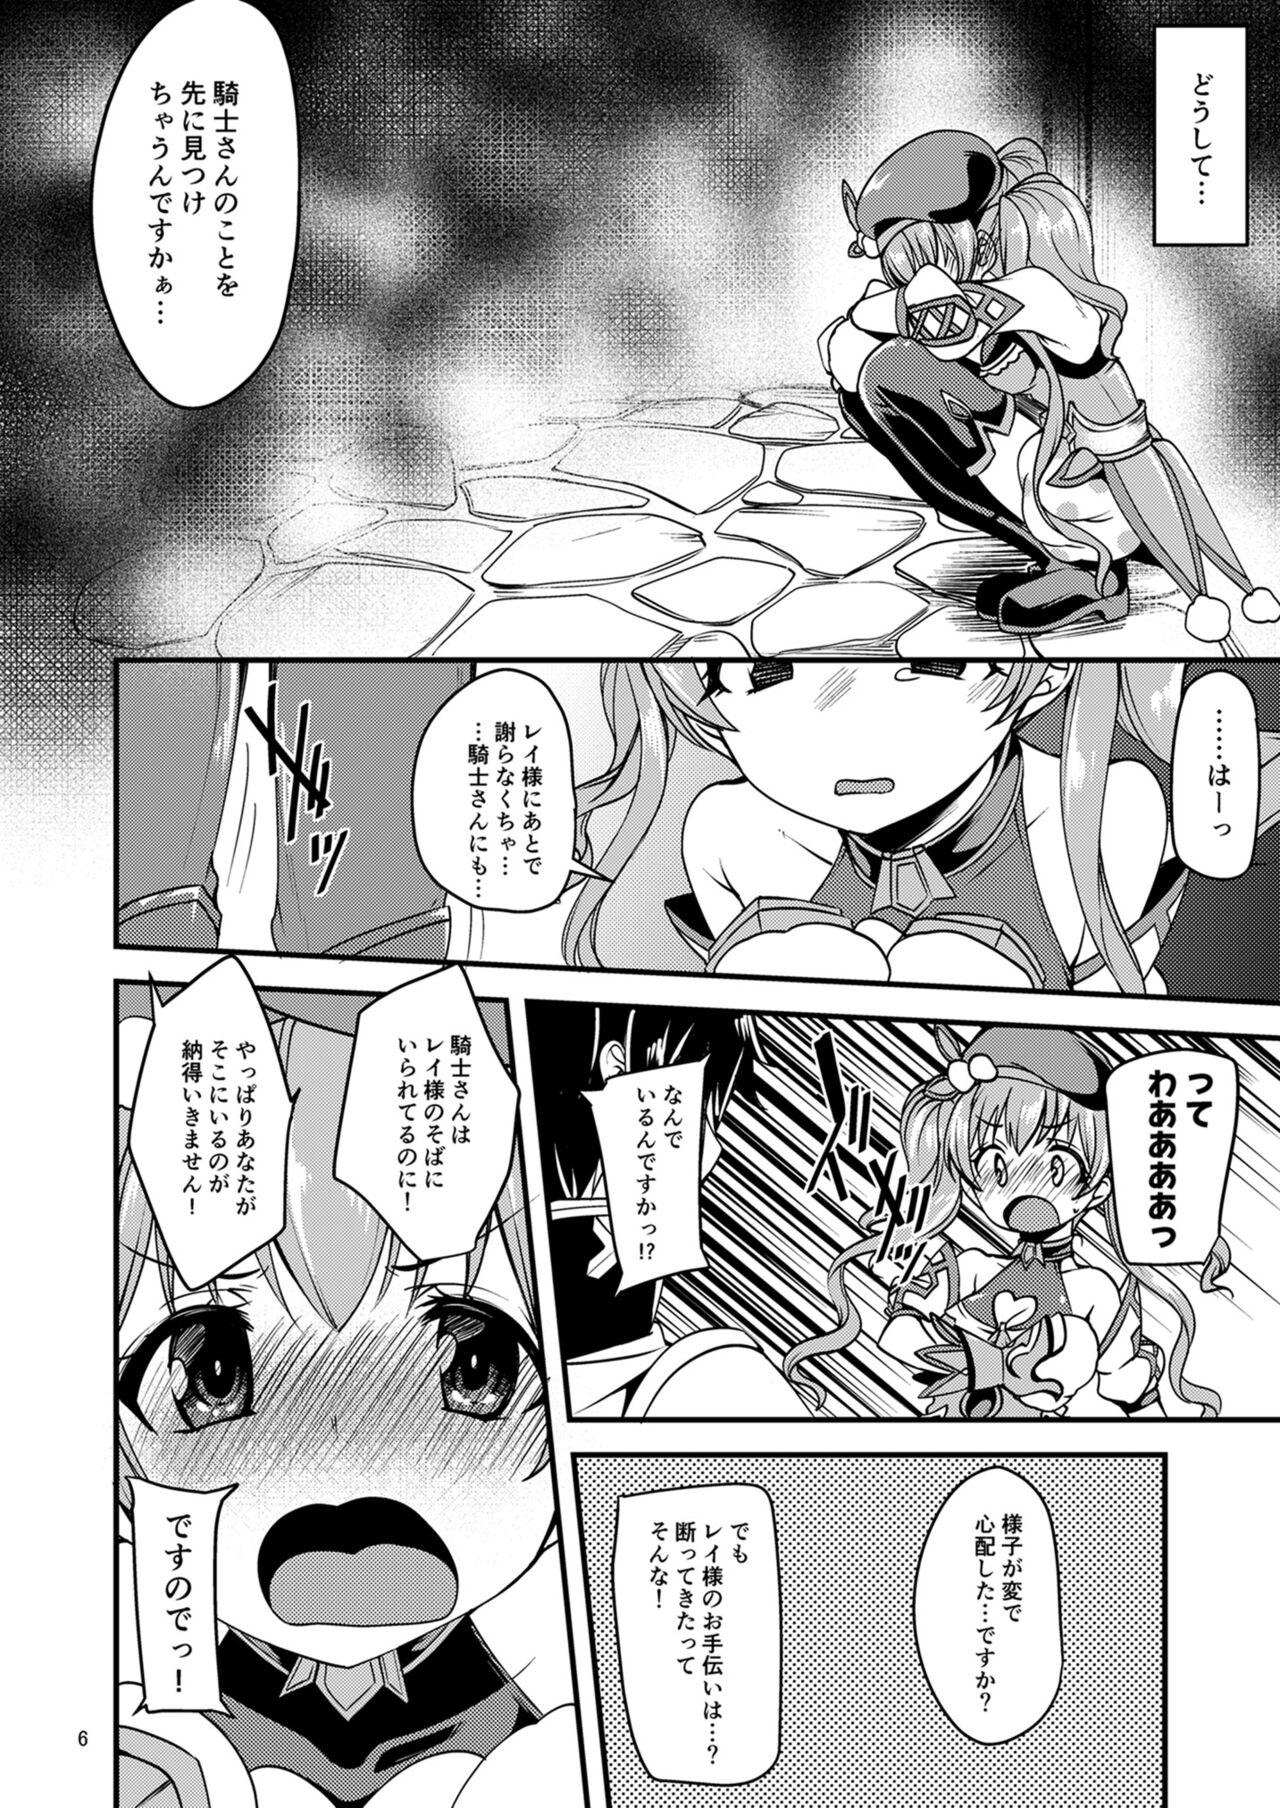 Smoking Tsumugi Make Heroine Move!! - Princess connect Groupsex - Page 5